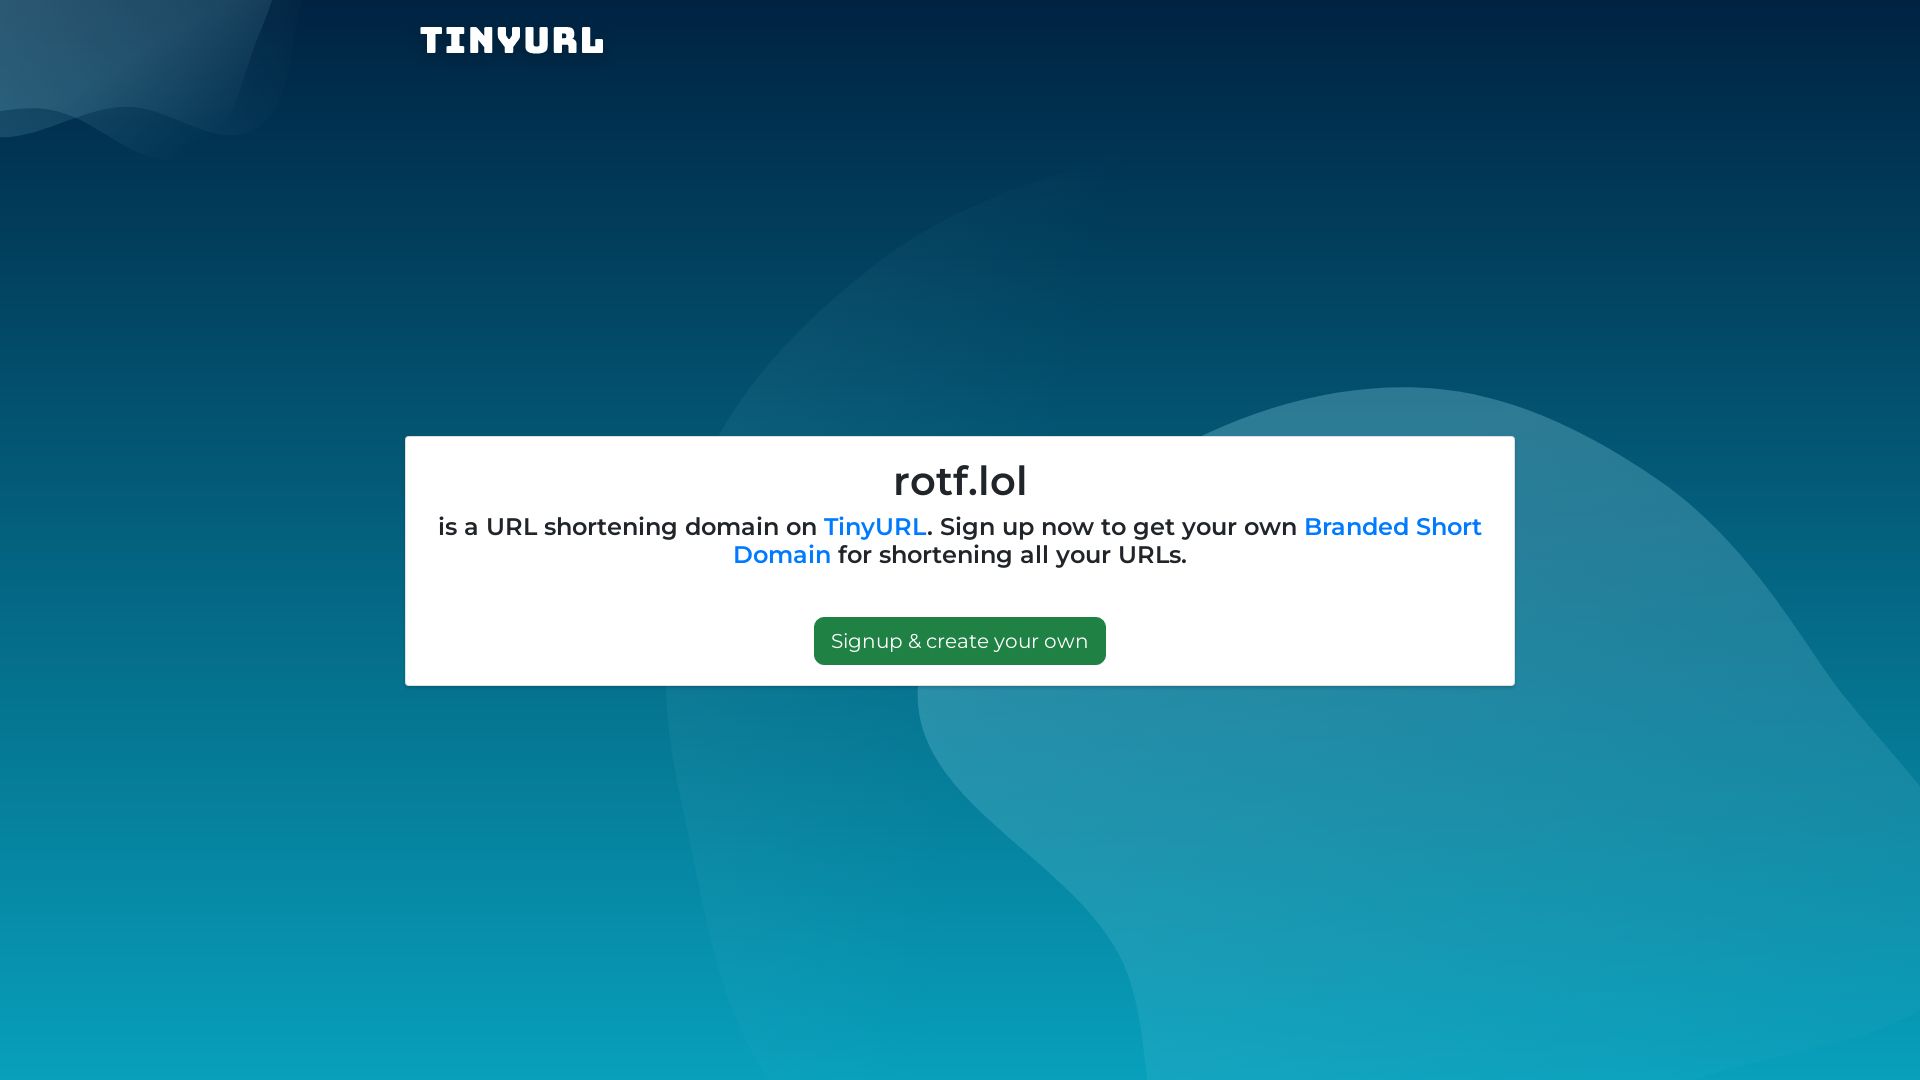 Status do site rotf.lol está   ONLINE